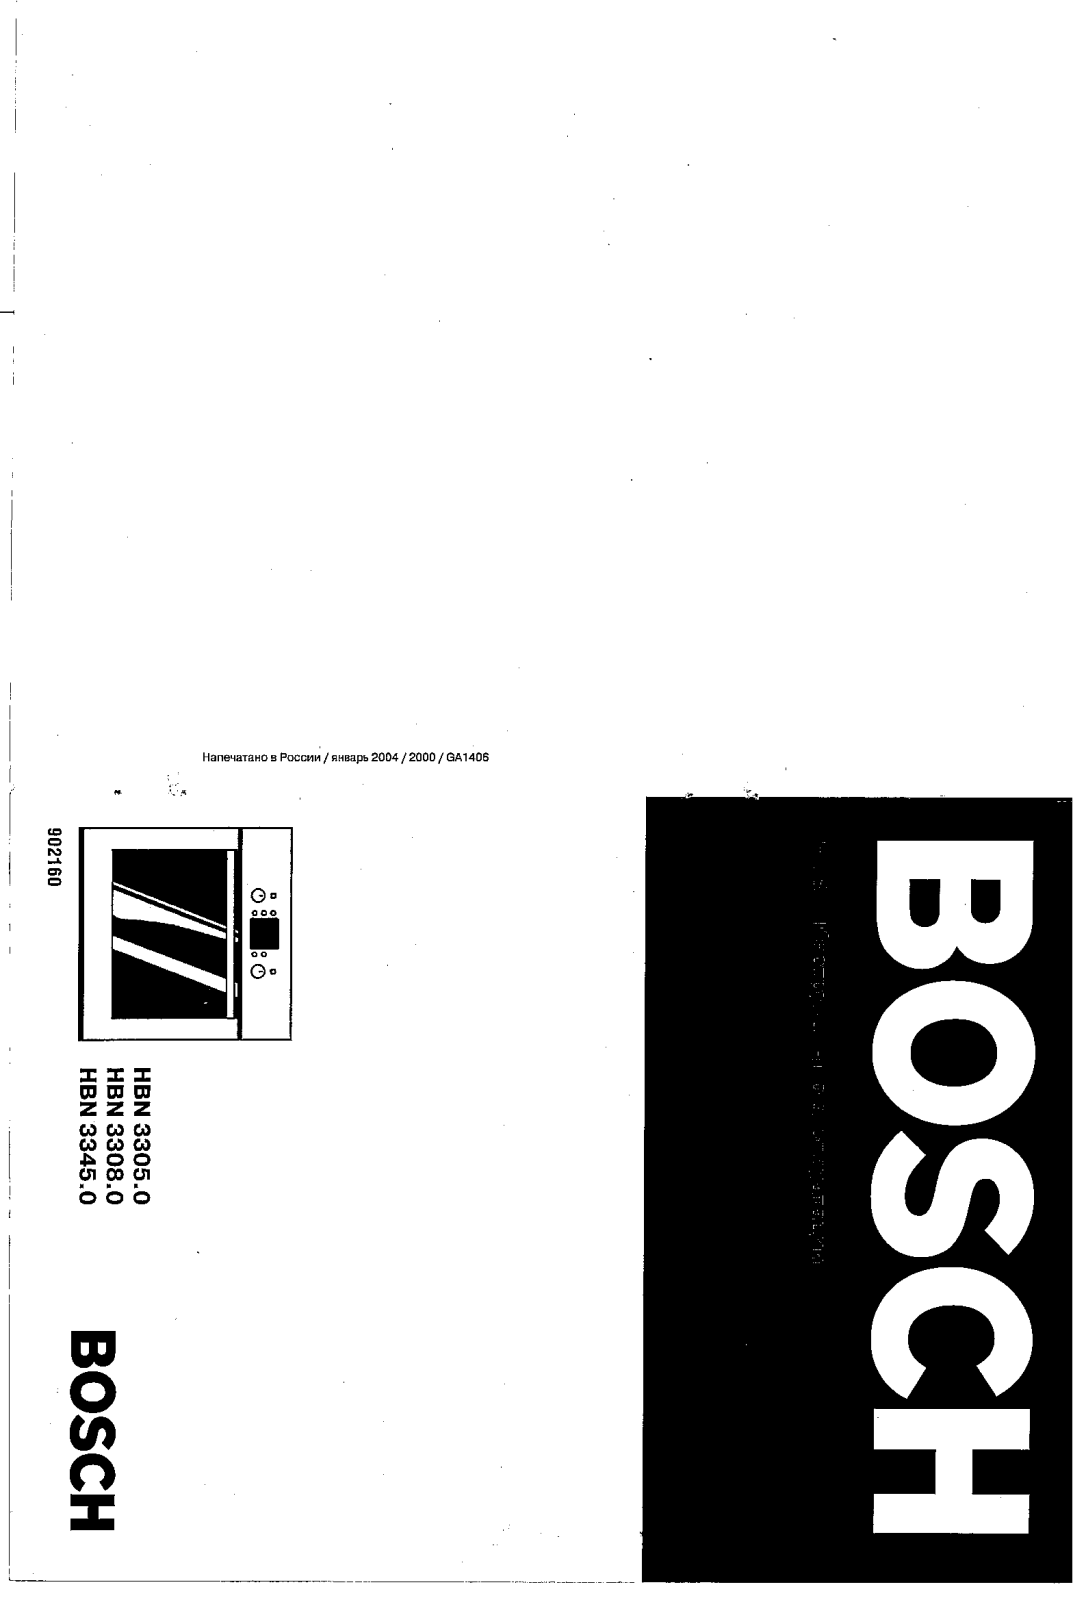 Bosch HBN 3345.0 User Manual